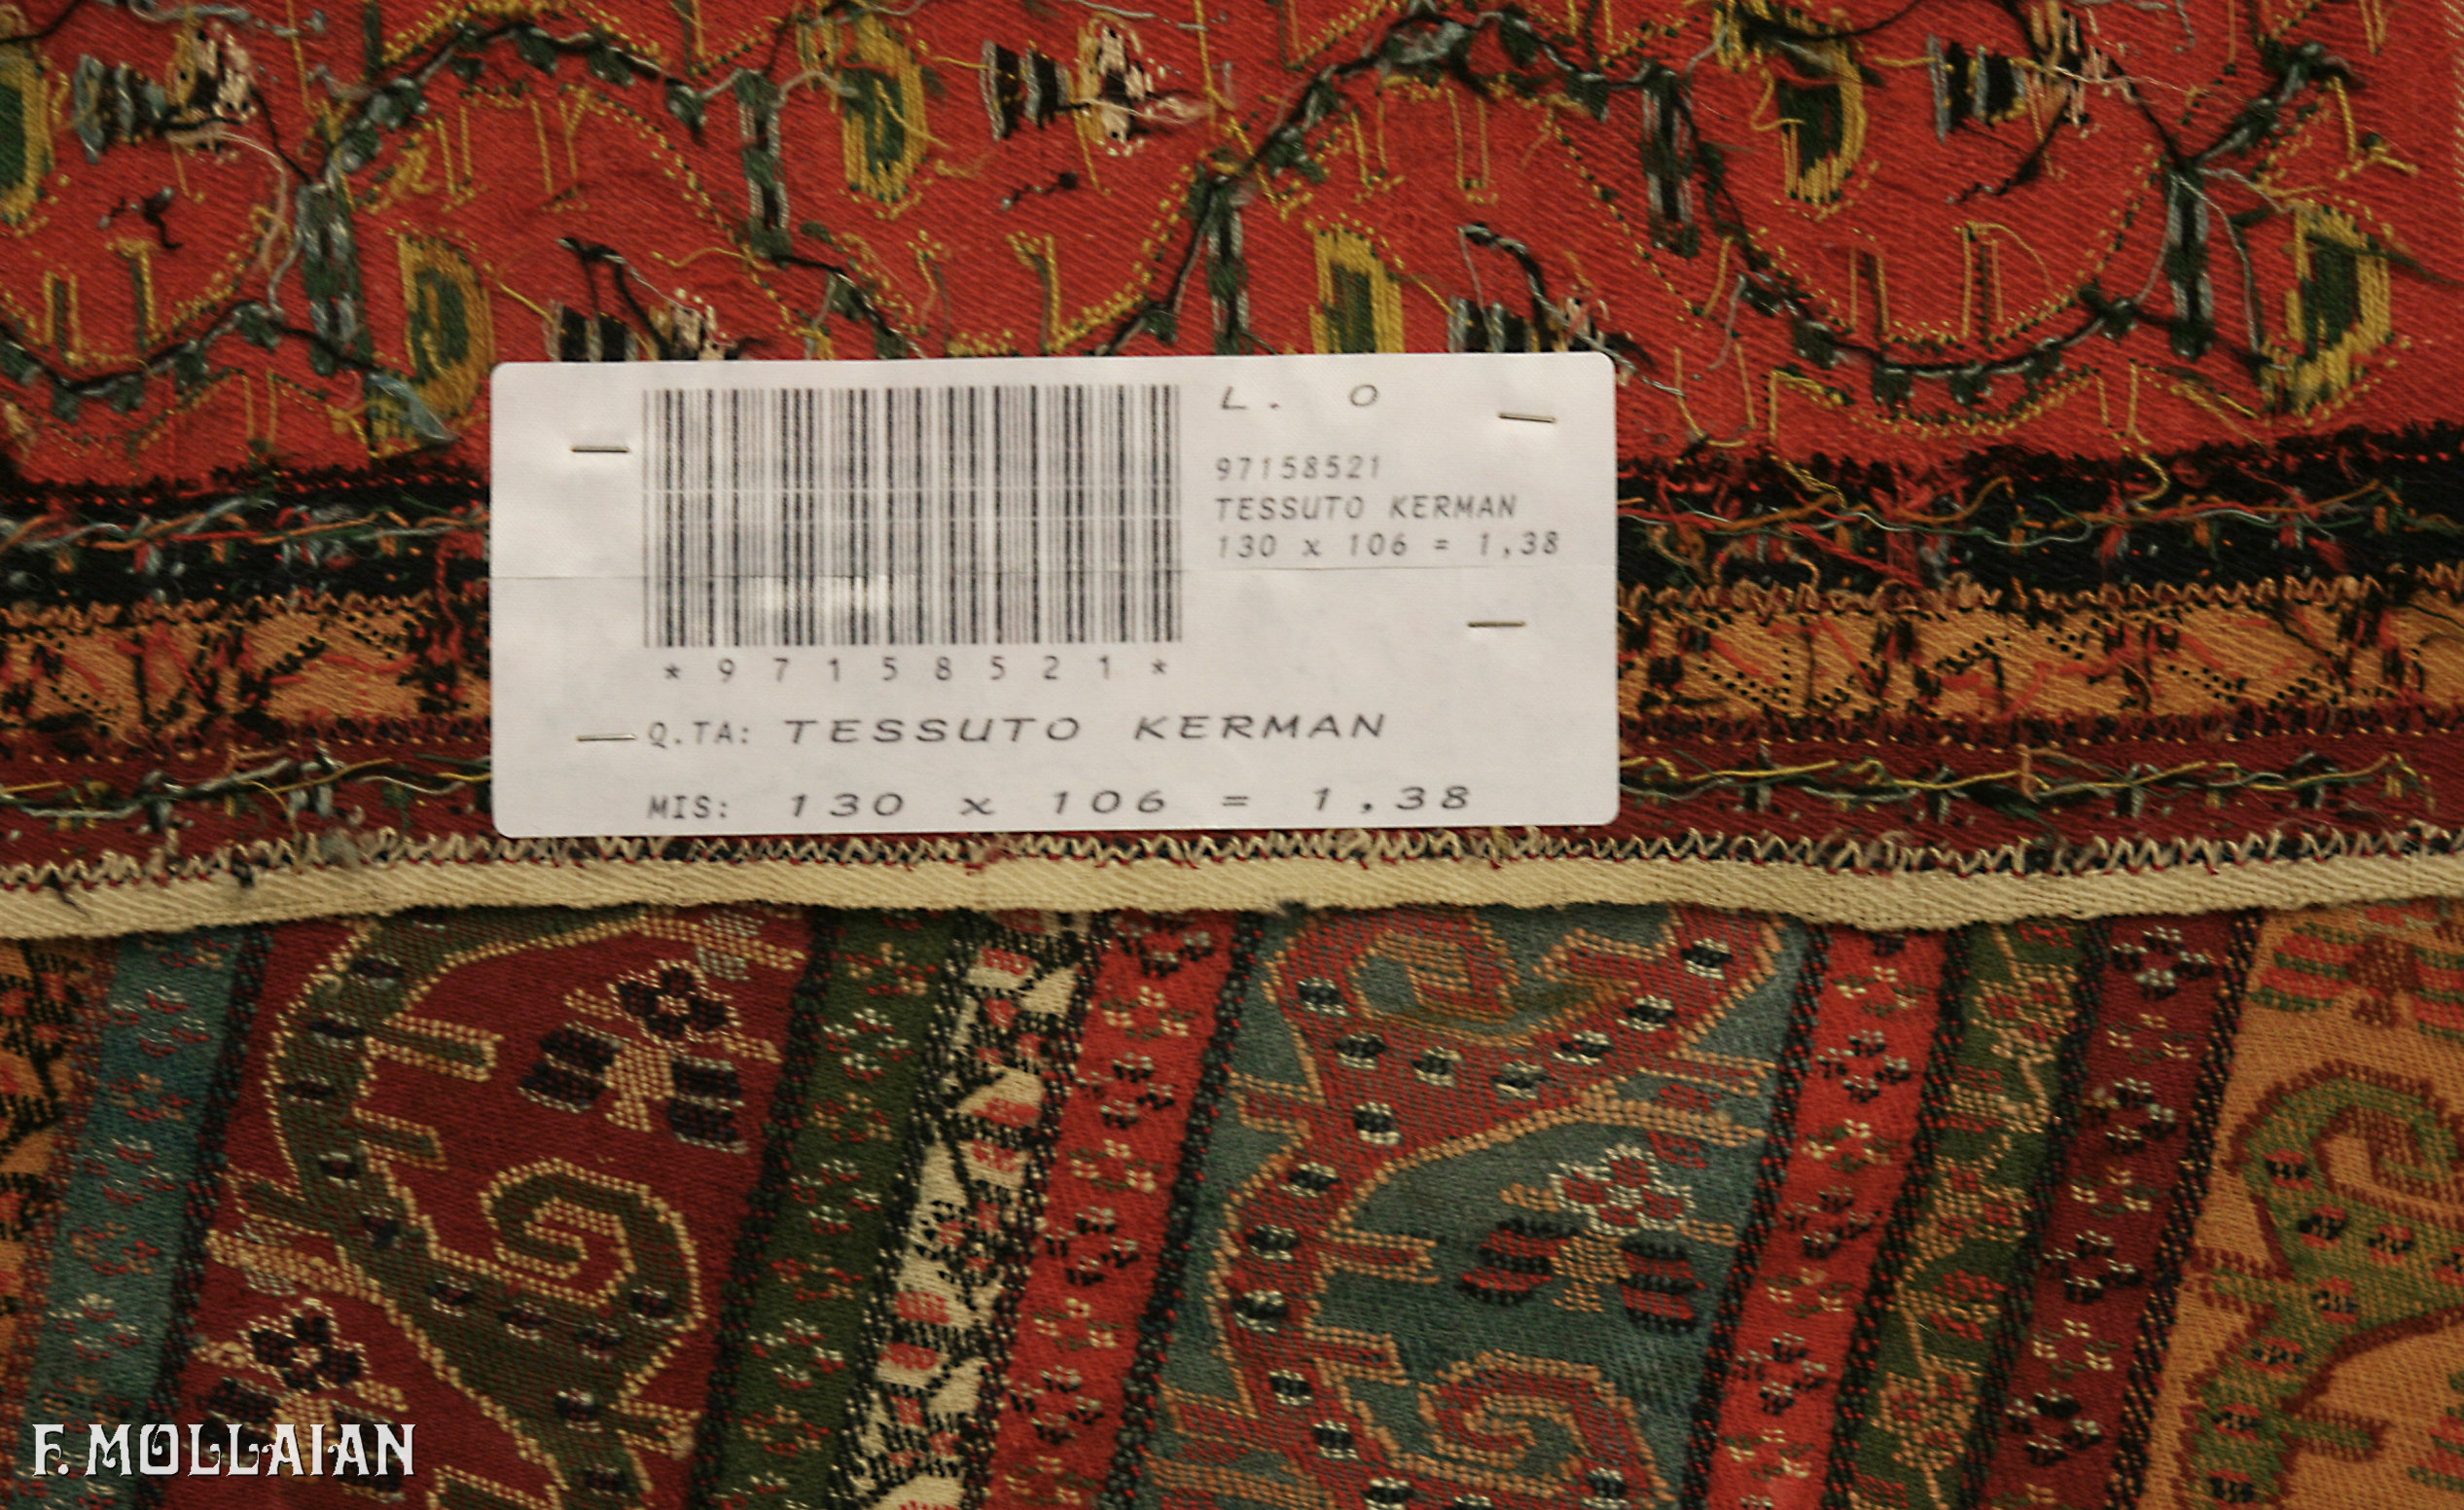 Tessuto Antico Kerman n°:97158521